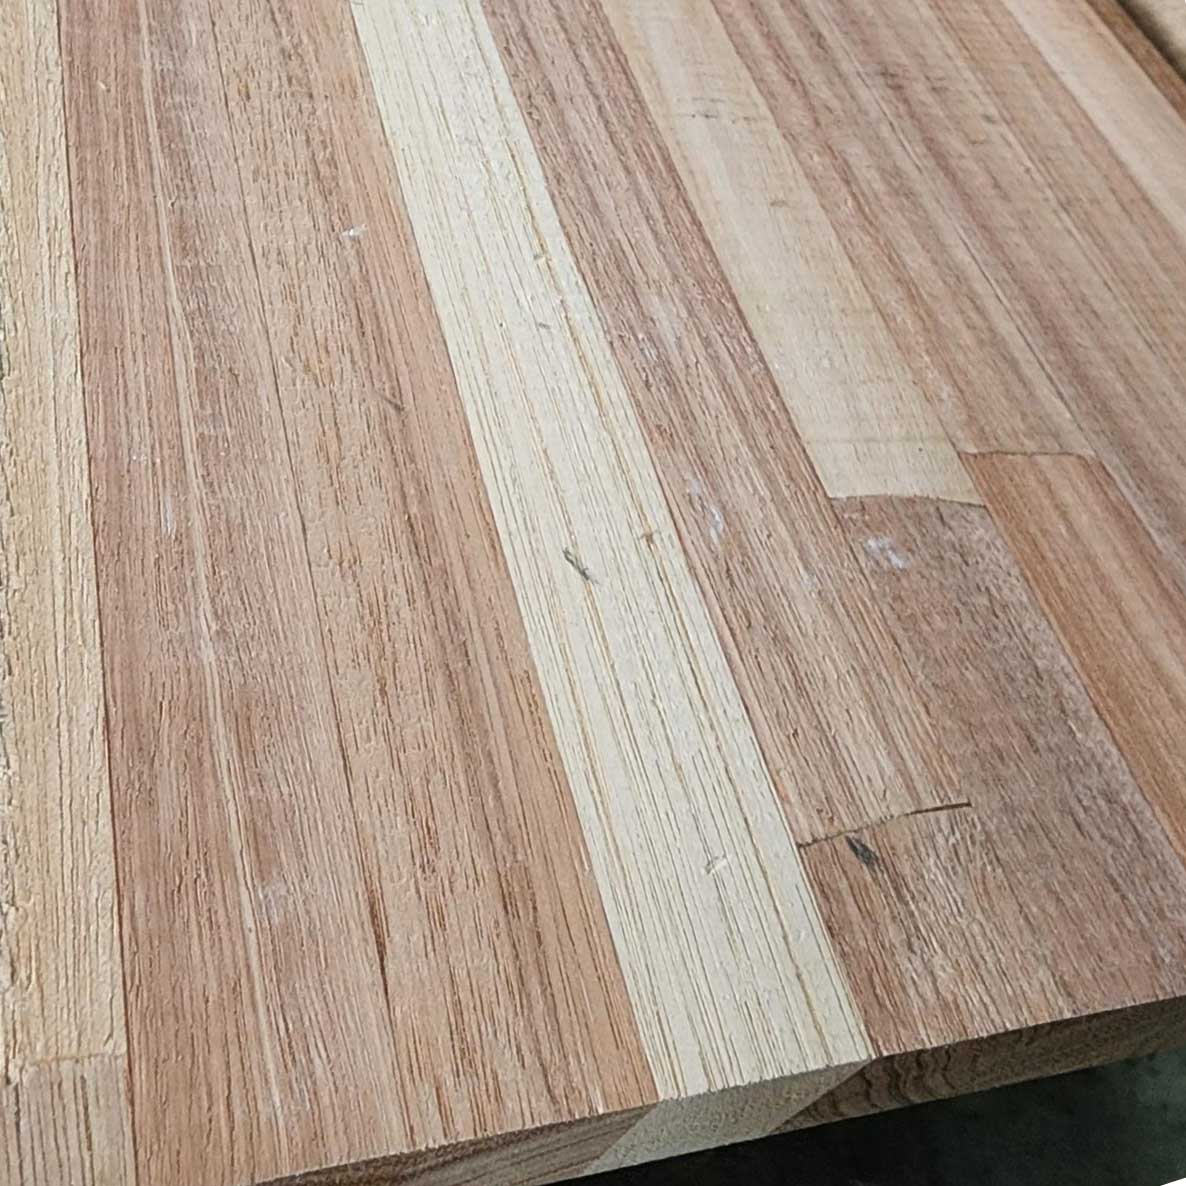 Mixed Hardwood LTF Shiplap Flooring